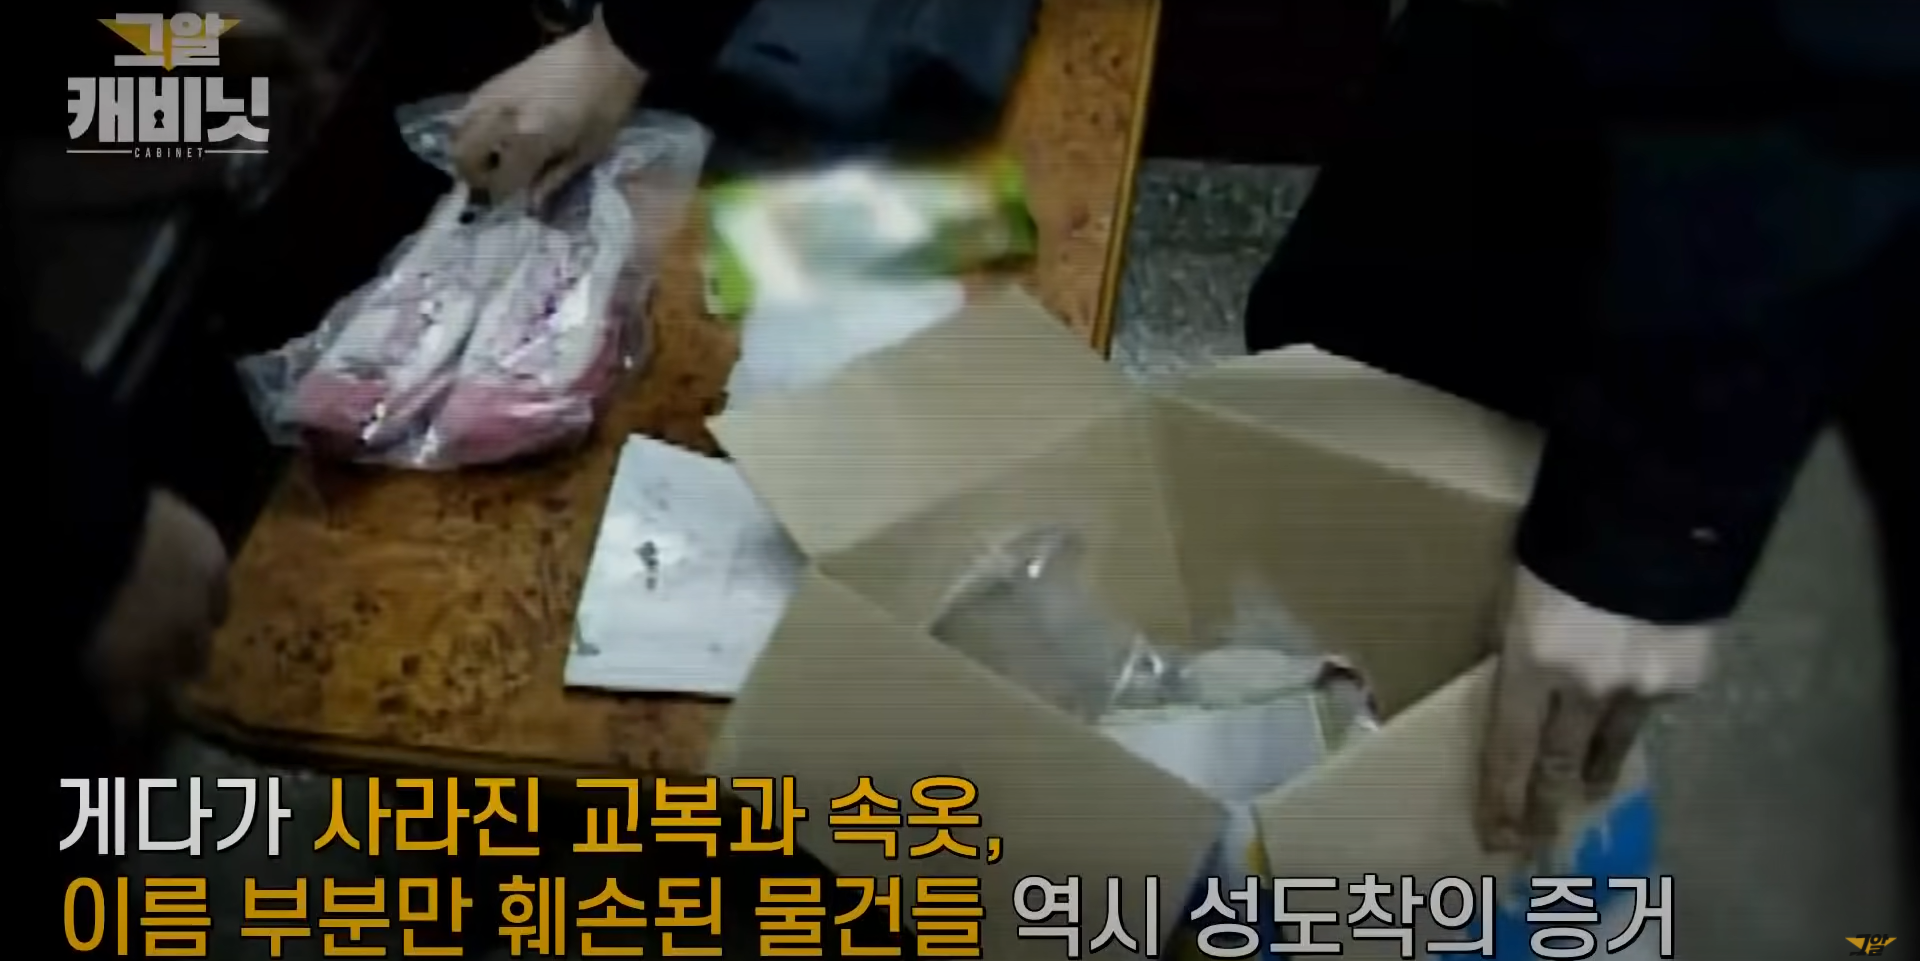 unsolved crimes in korea - victim's belongings